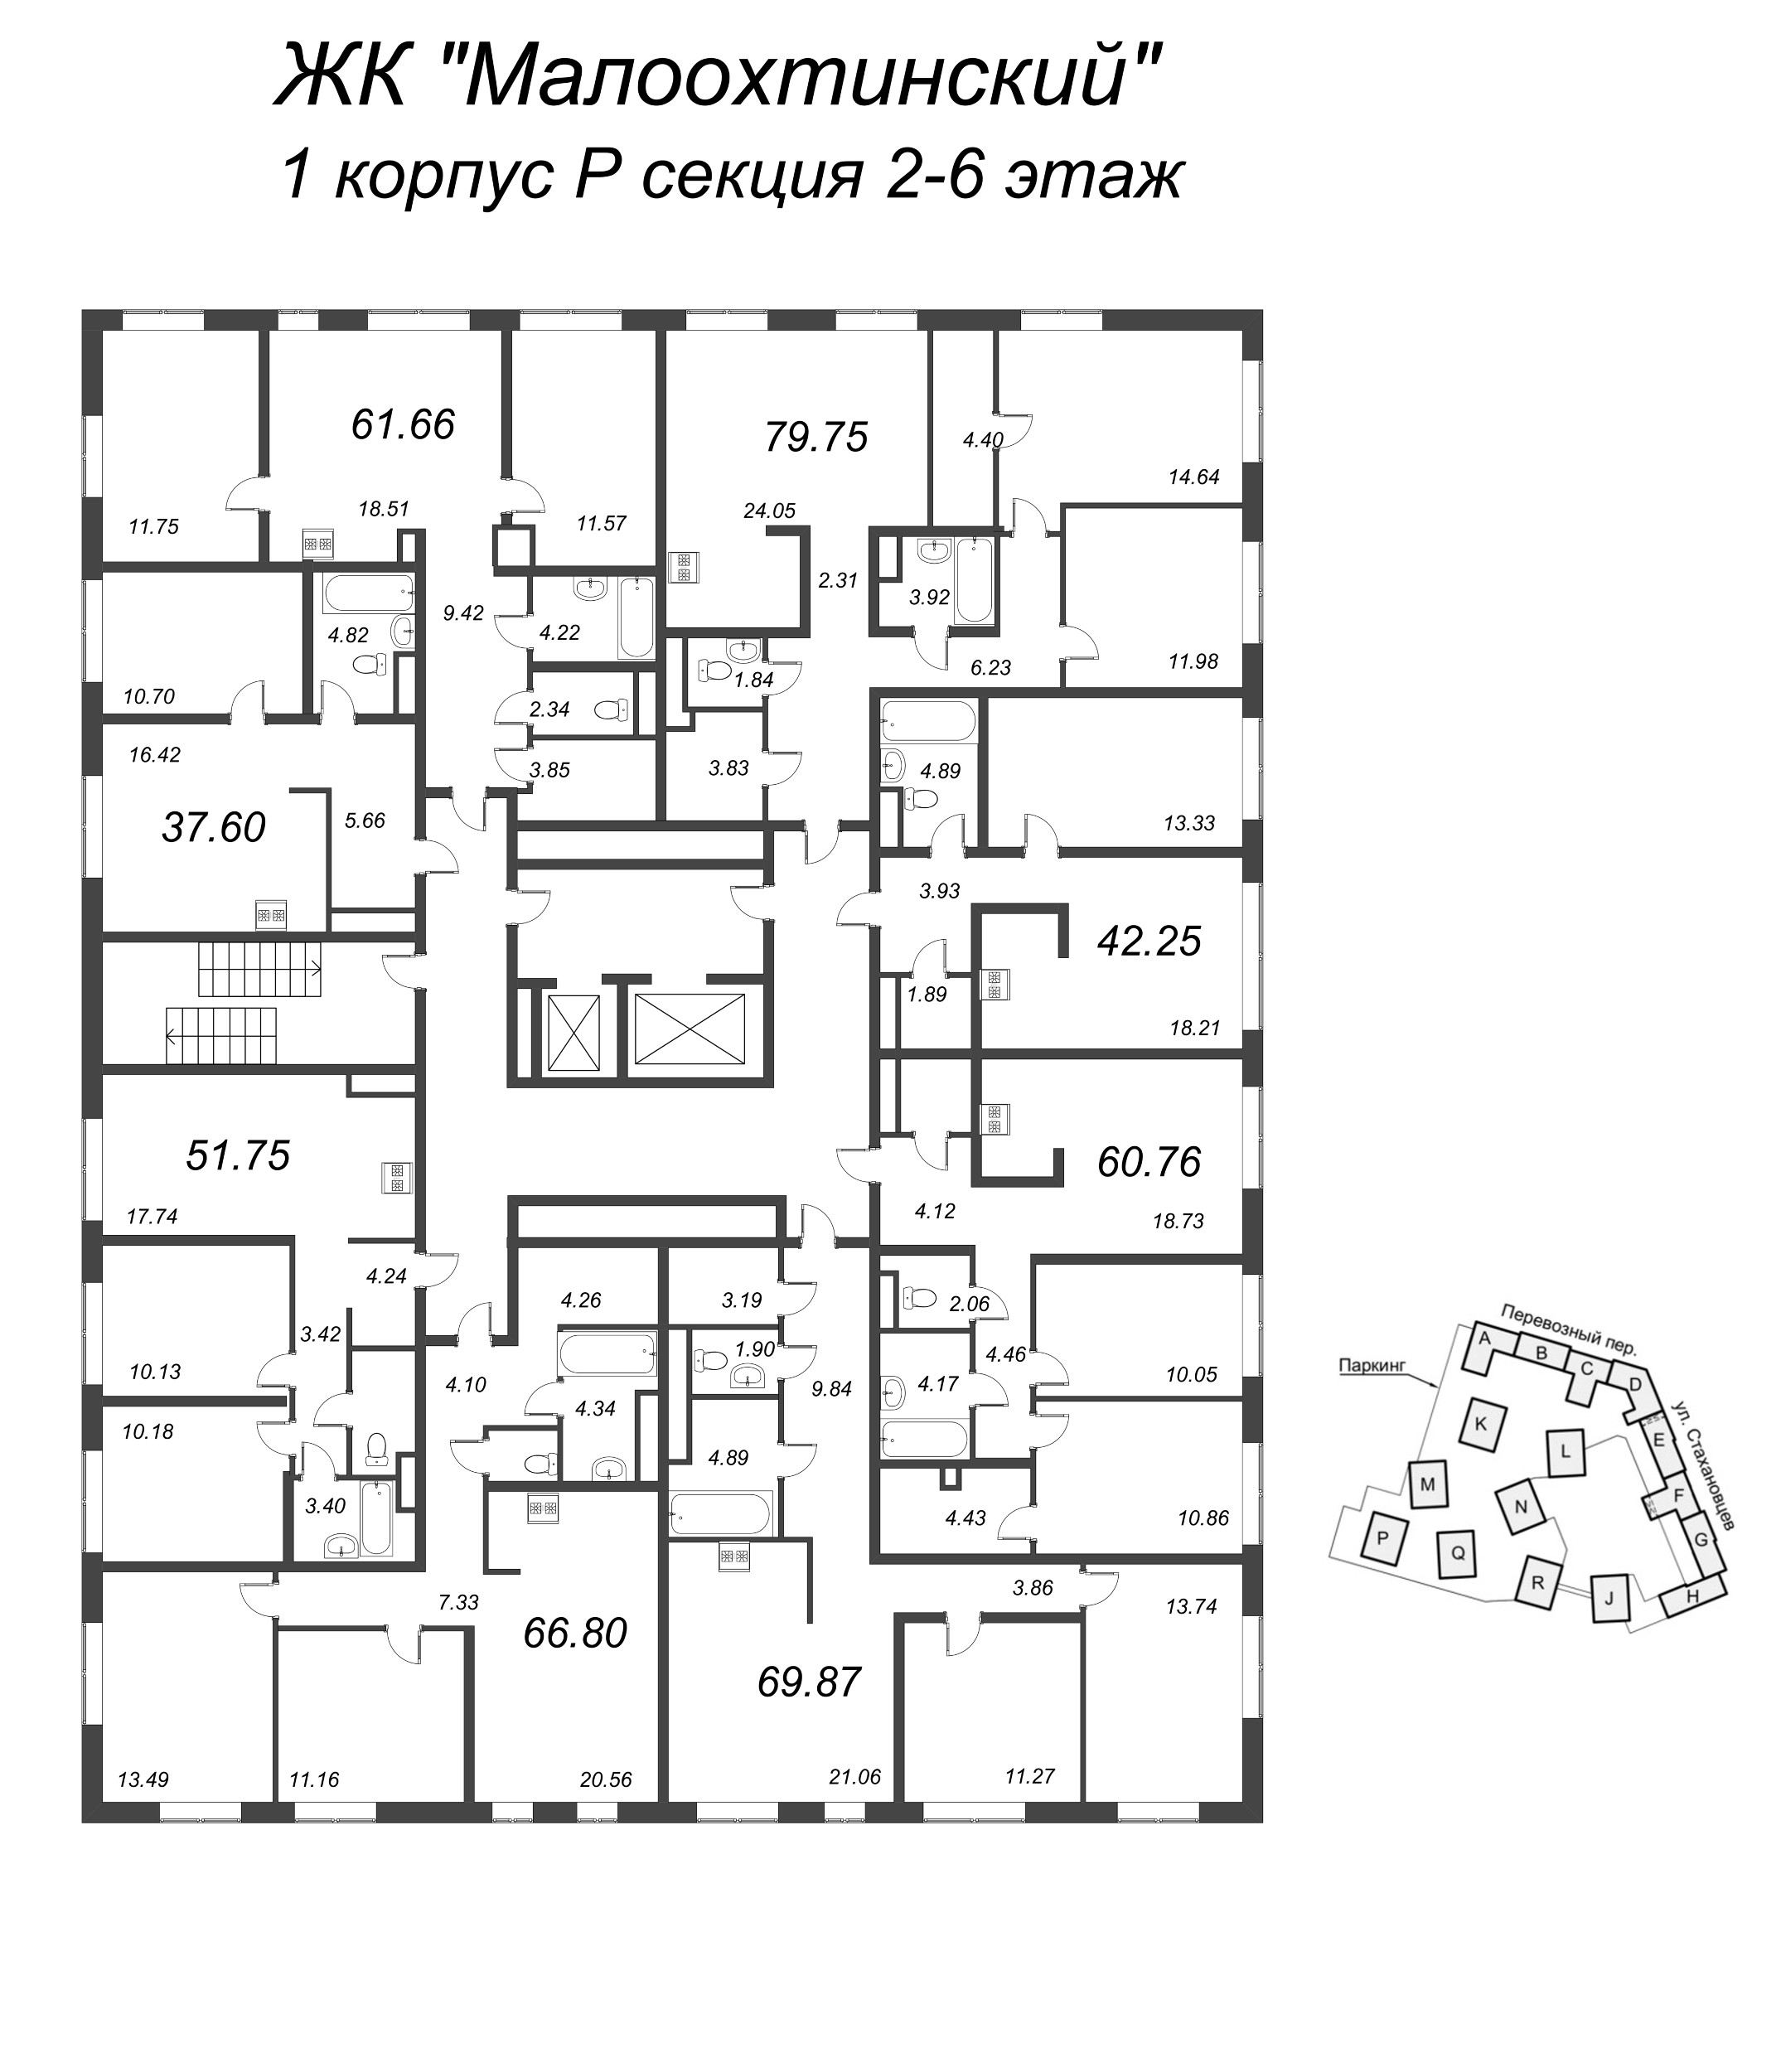 3-комнатная (Евро) квартира, 81.5 м² - планировка этажа